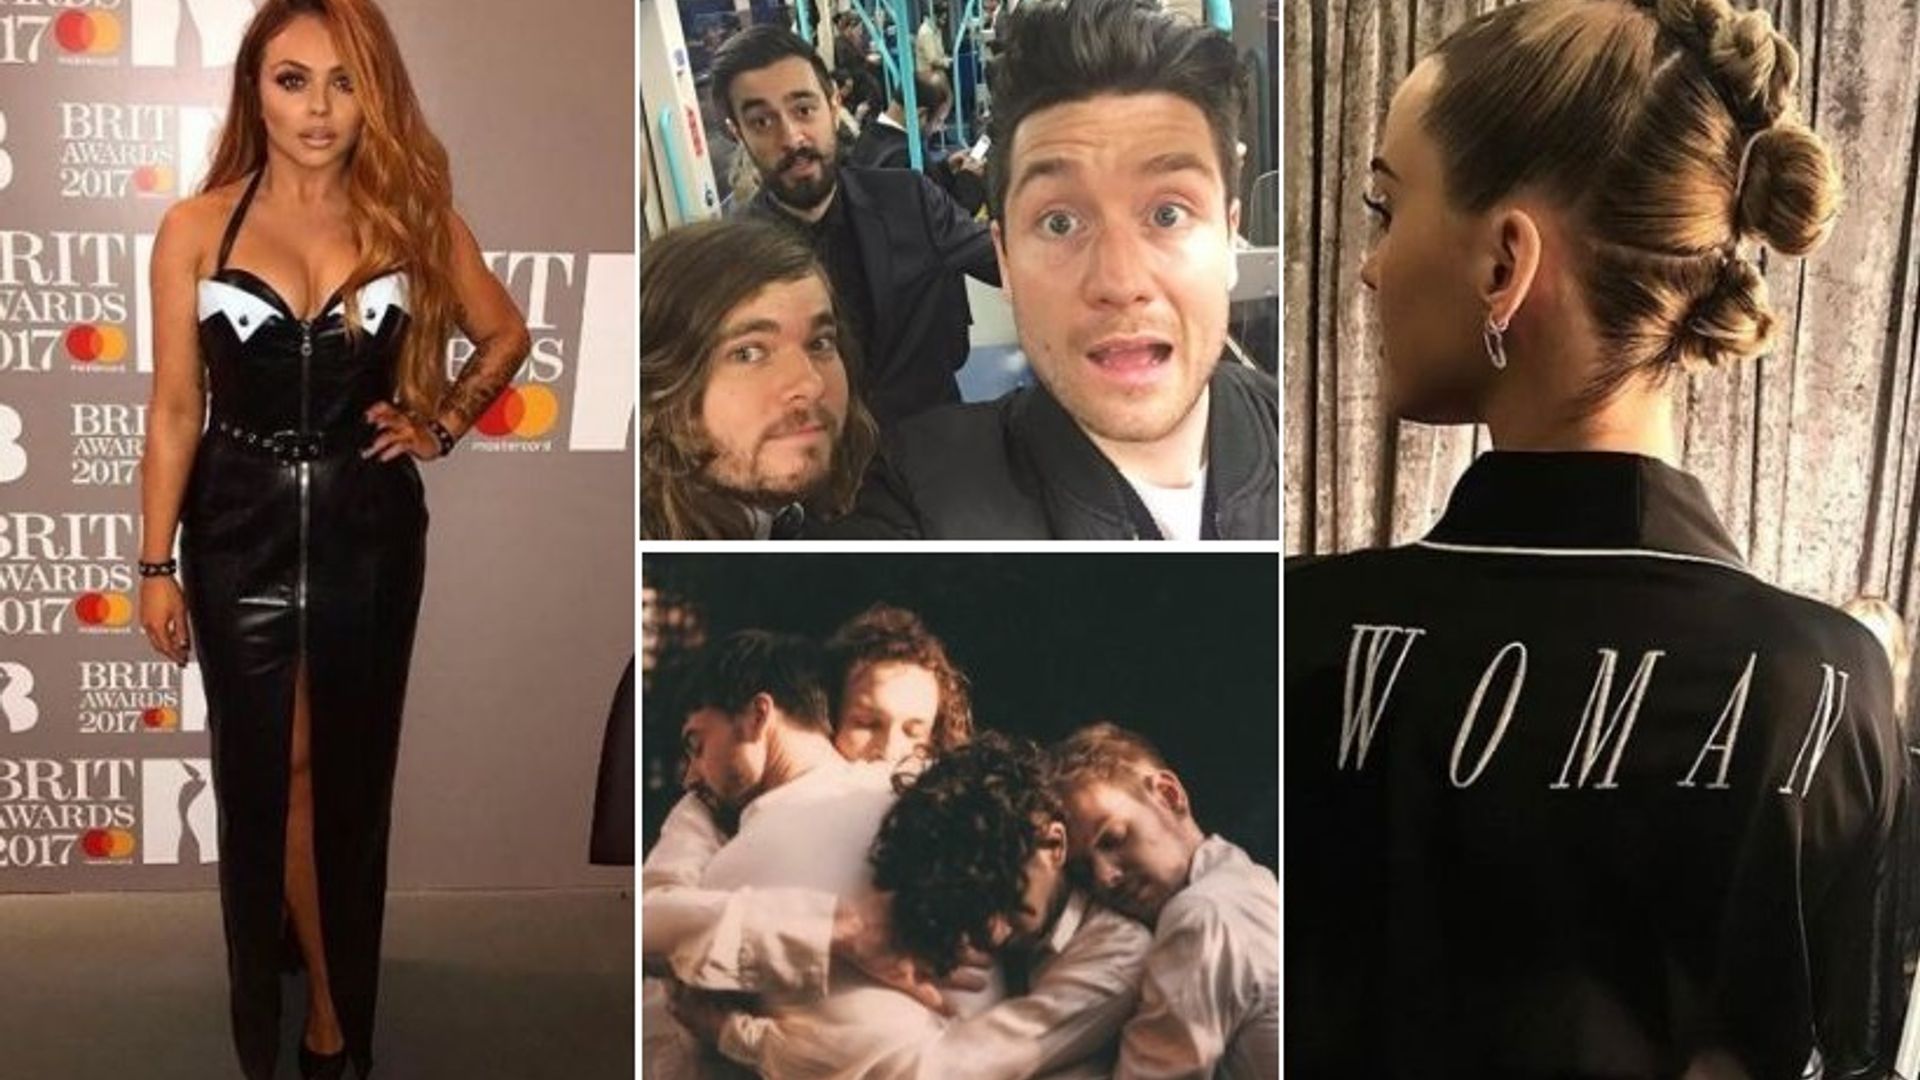 BRIT Awards 2017: The best behind-the-scenes Instagram photos